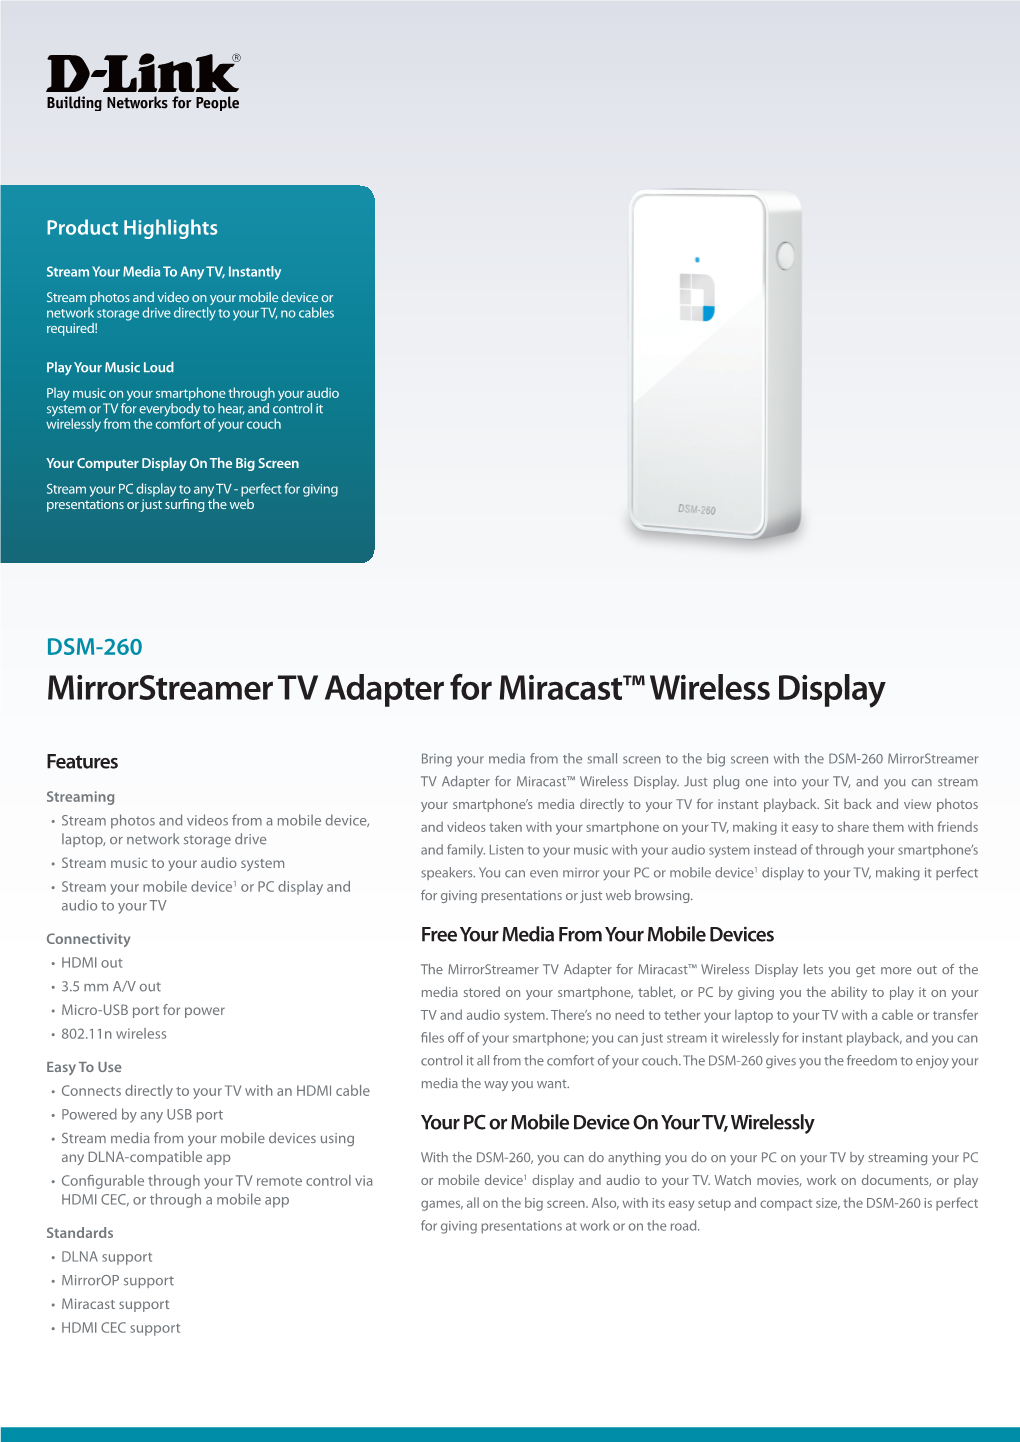 Mirrorstreamer TV Adapter for Miracast™ Wireless Display